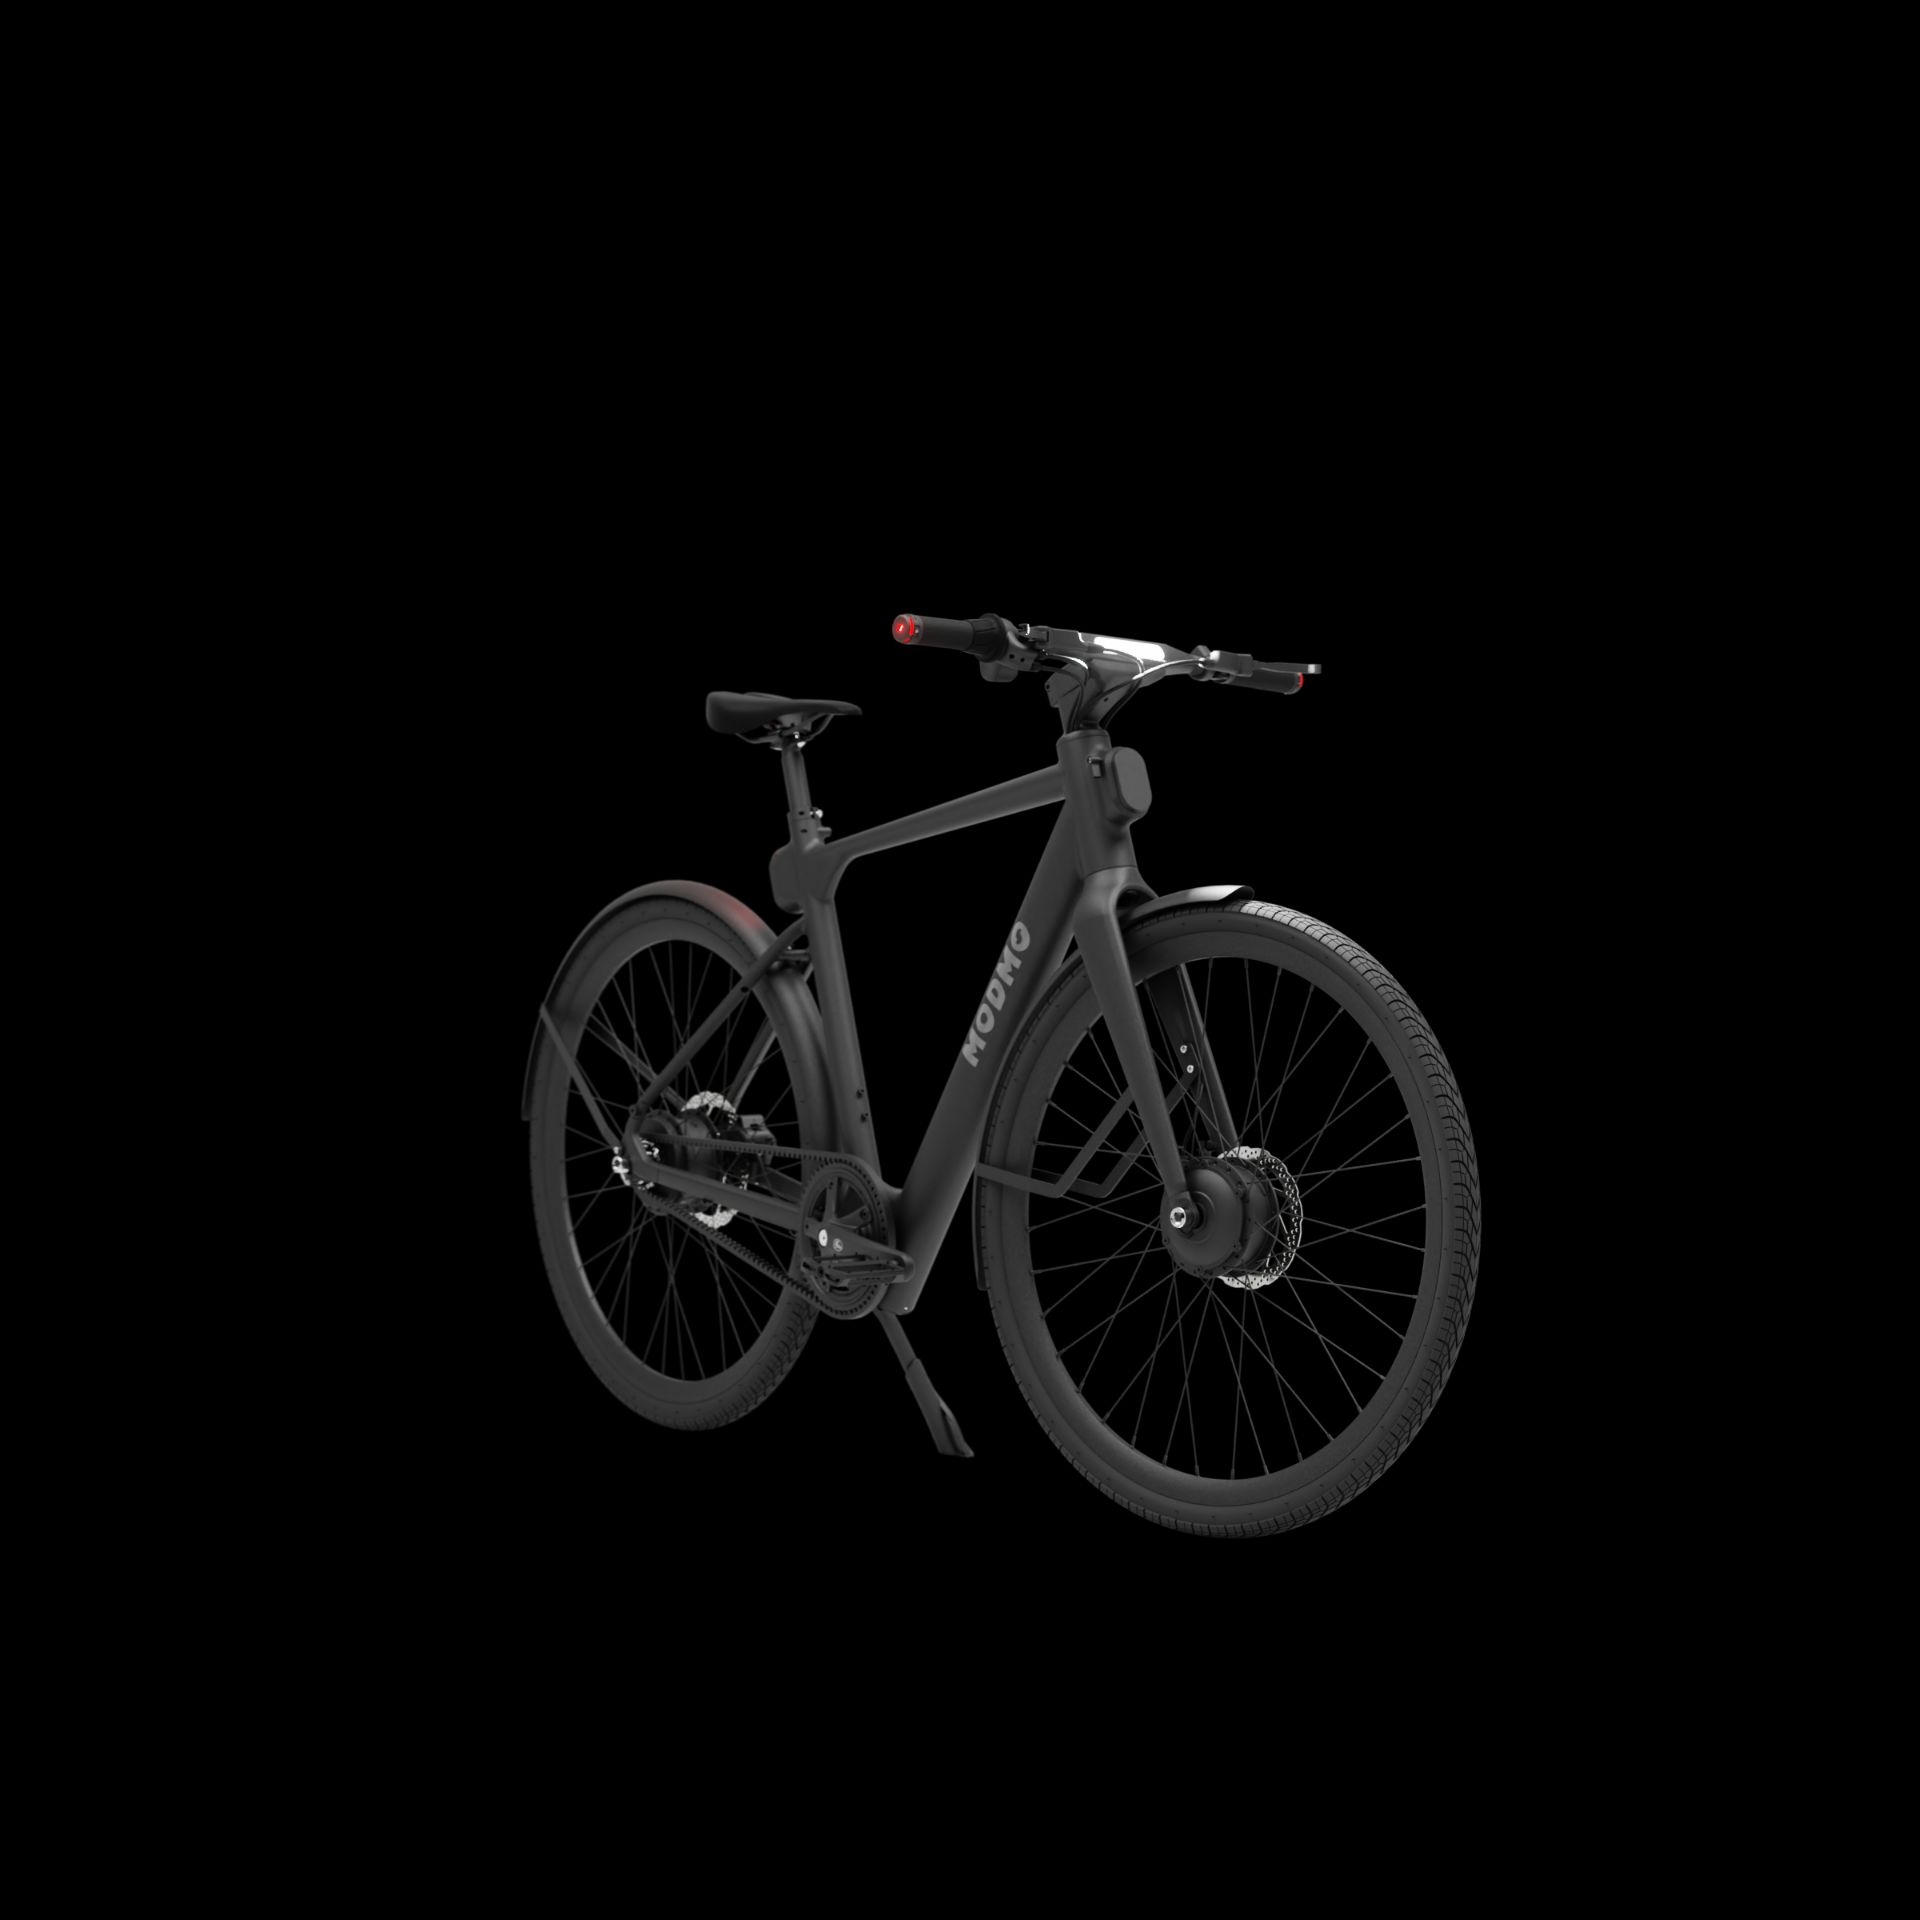 Modmo Saigon+ Electric Bicycle - RRP £2800 - Size M (Rider: 155-175cm) - Image 2 of 19